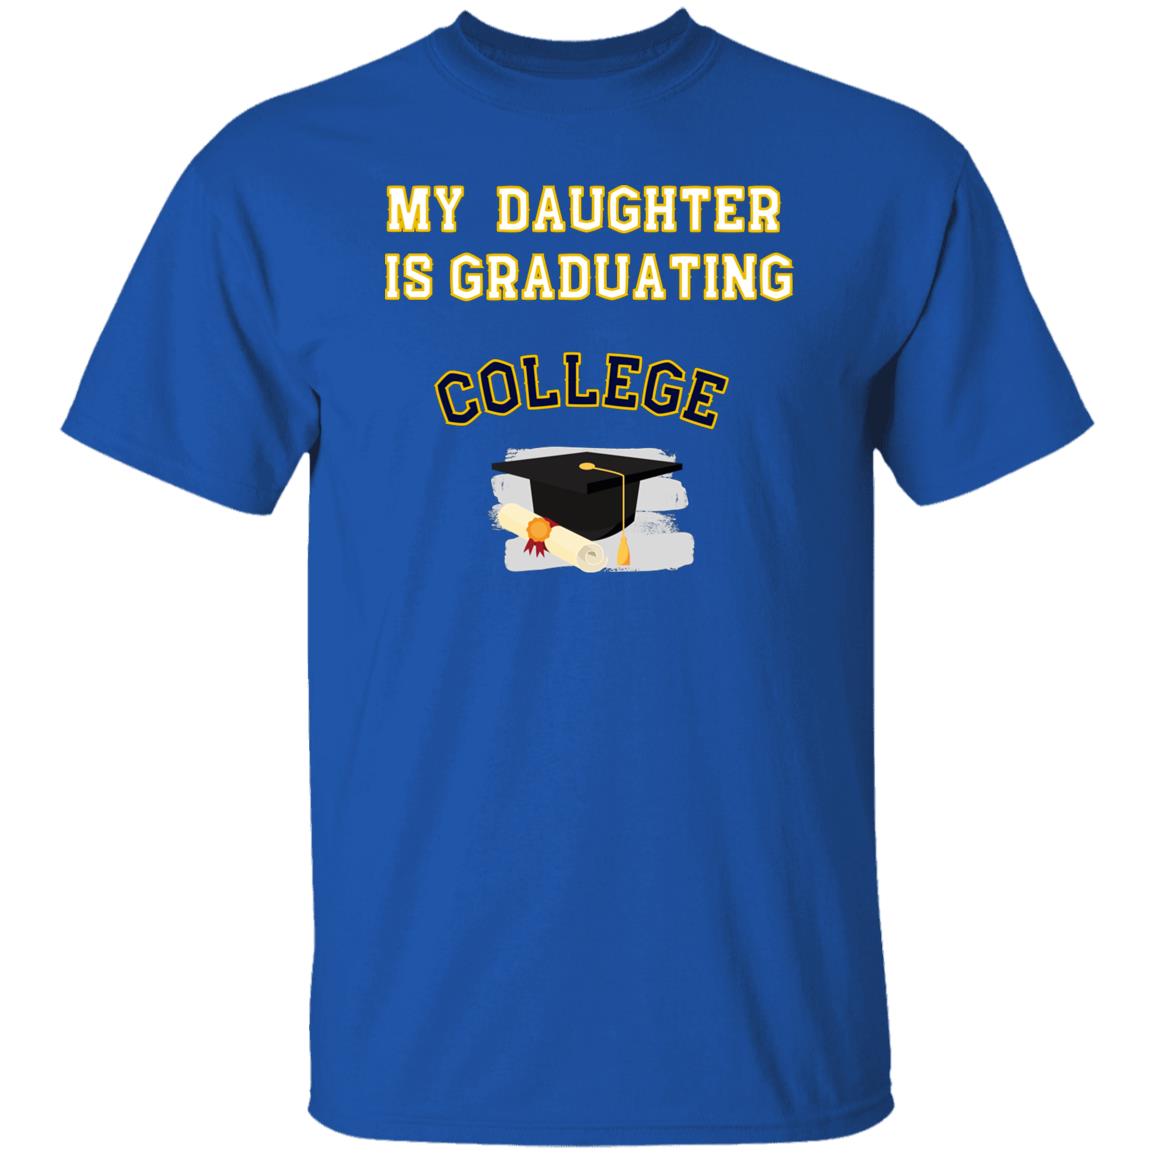 My daughter is graduating College Tshirt